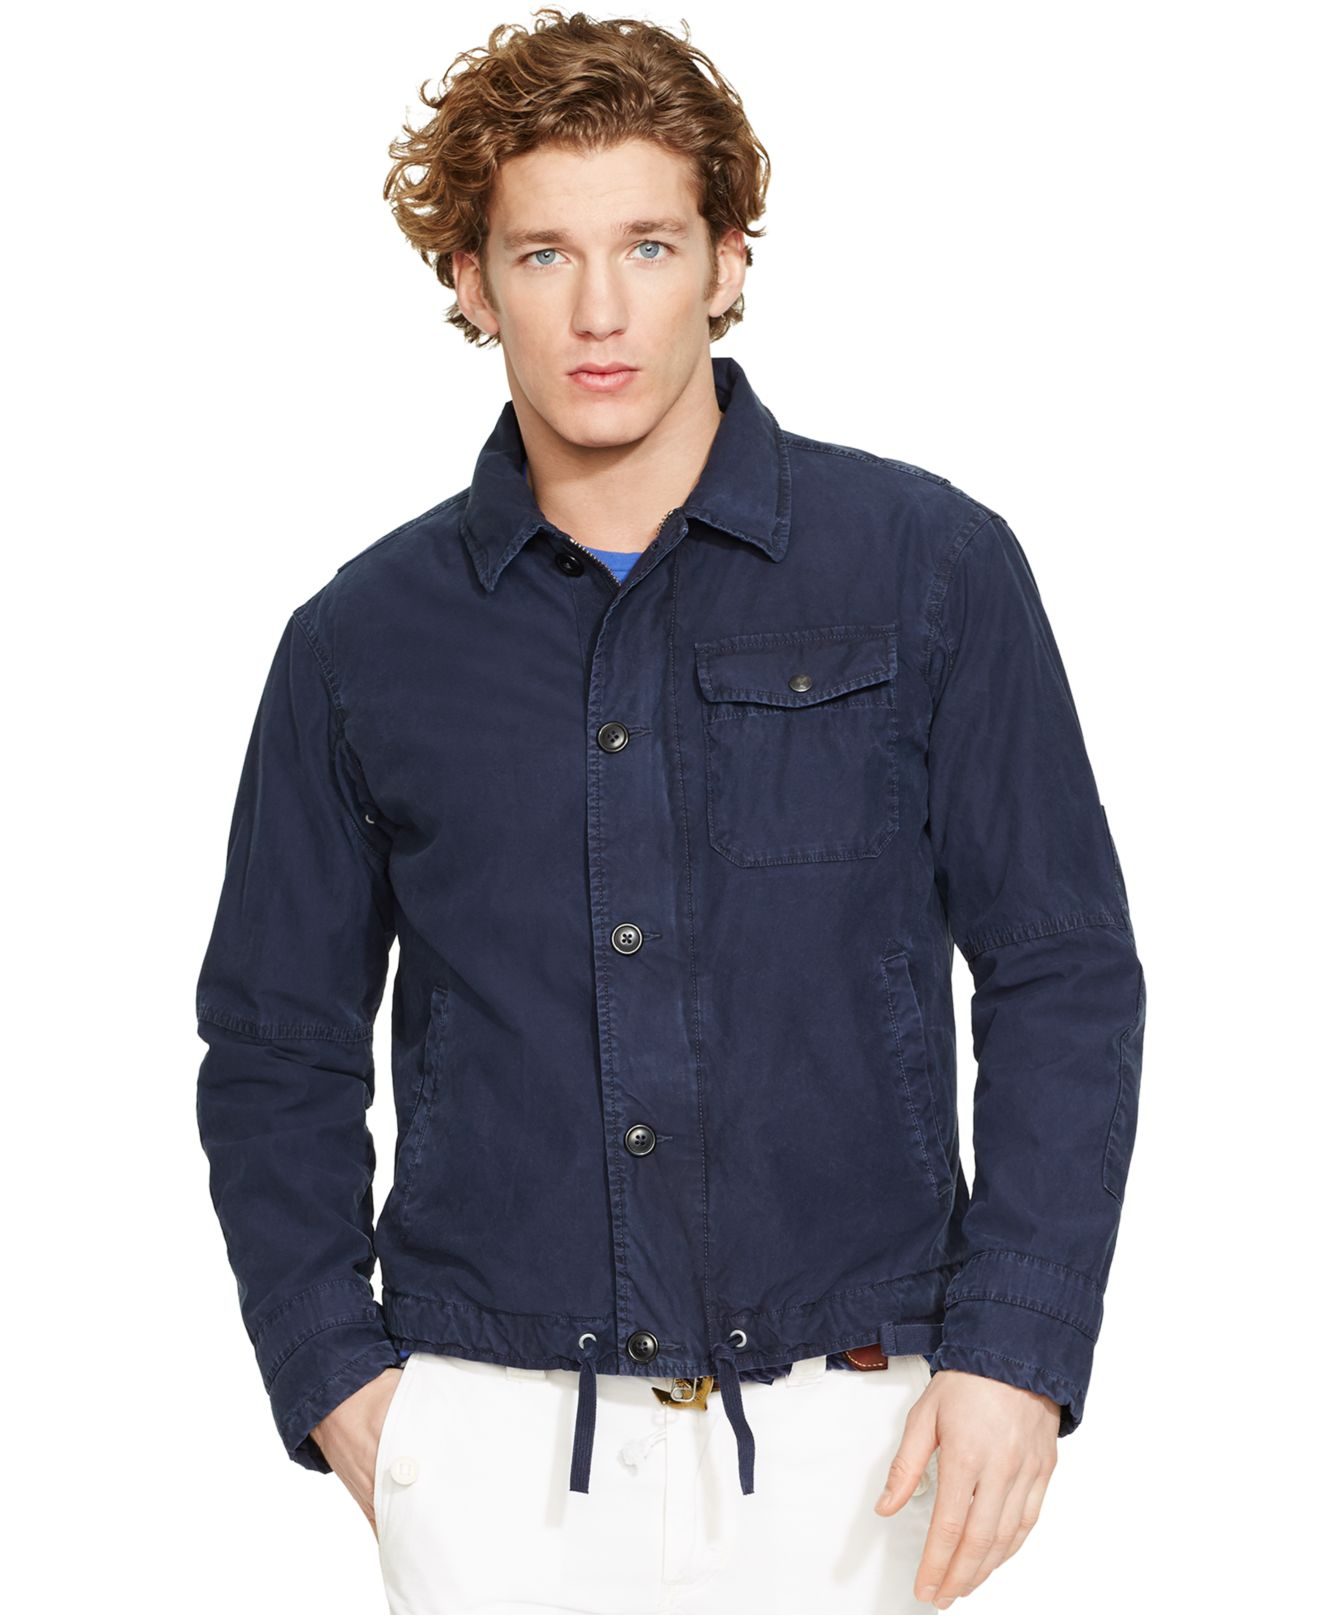 Lyst - Polo Ralph Lauren Twill Deck Jacket in Blue for Men